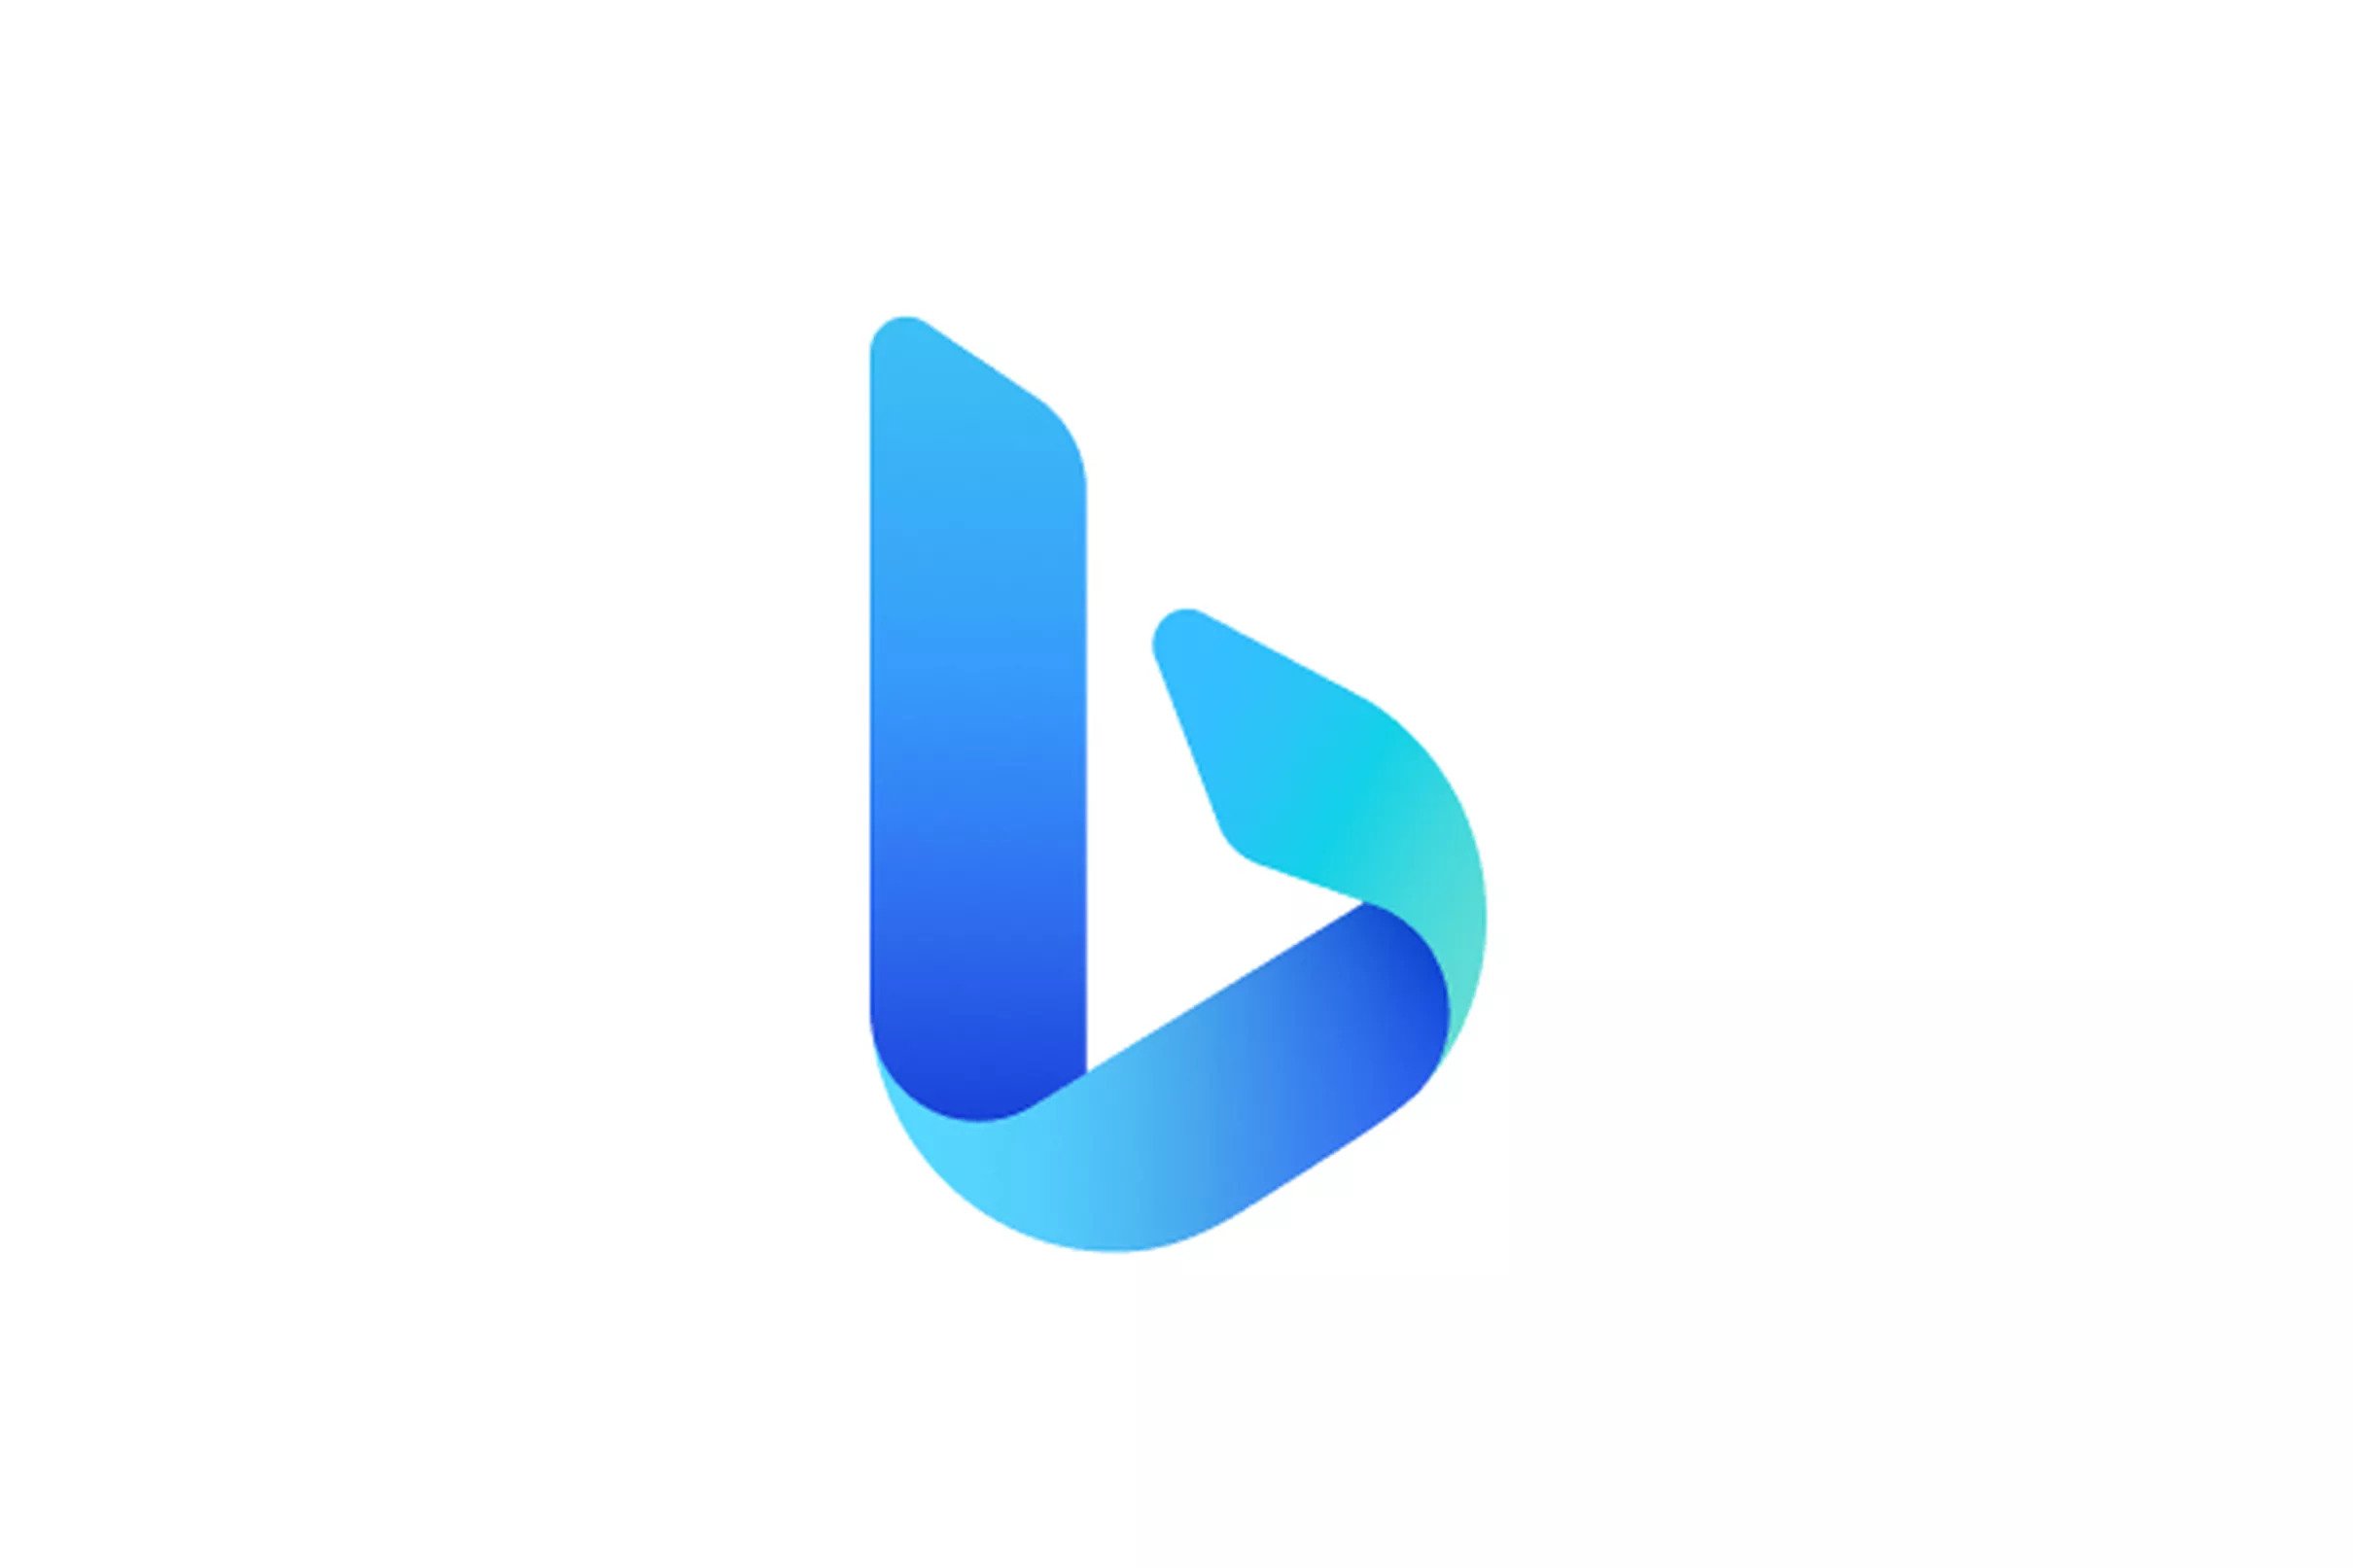 Microsoft rebrands Bing to “Microsoft Bing” with new logos